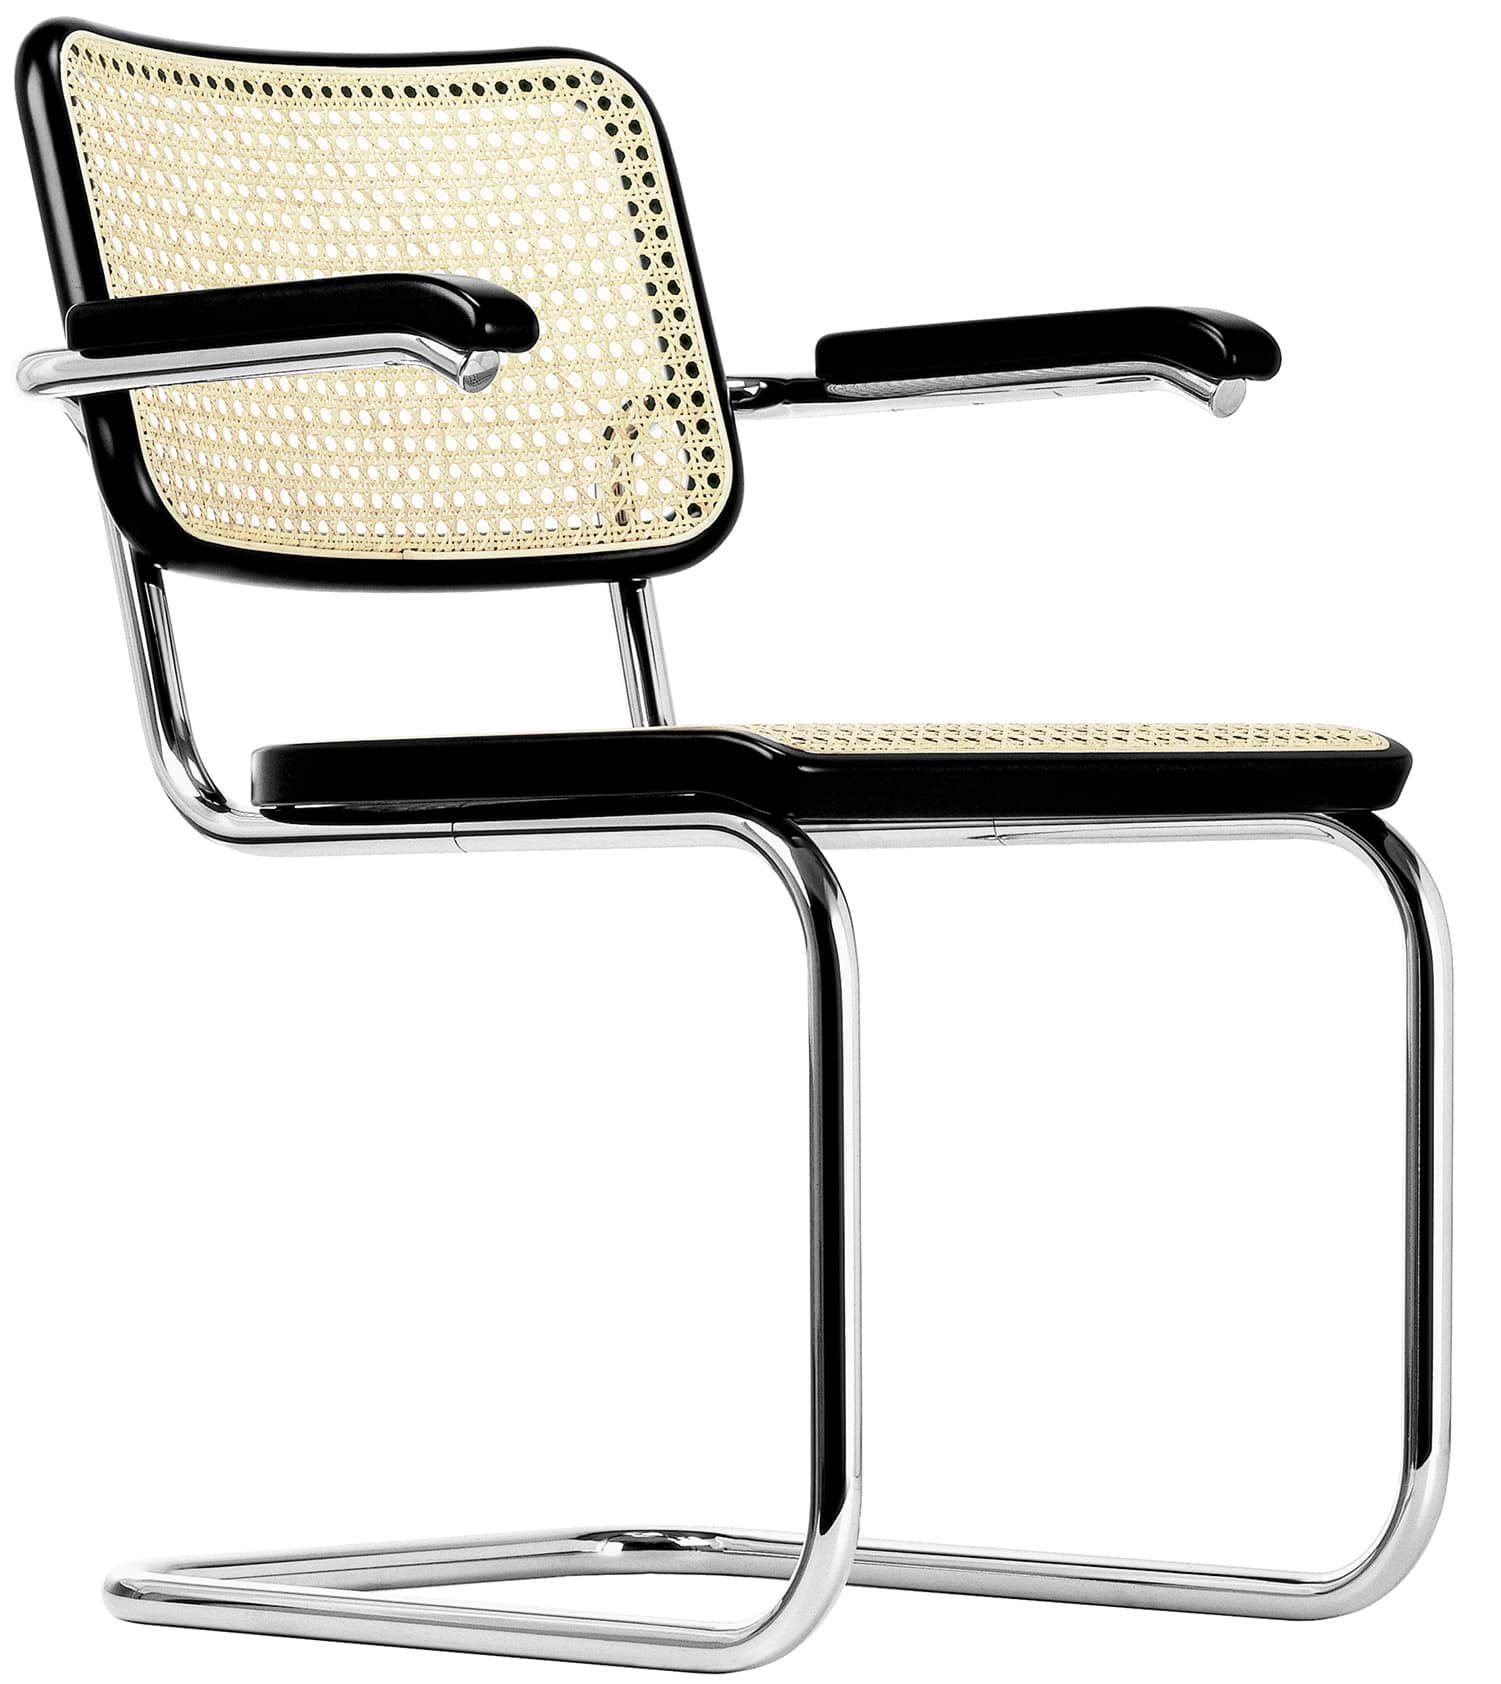 S 32 V 悬臂椅 - Marcel Breuer的图片
